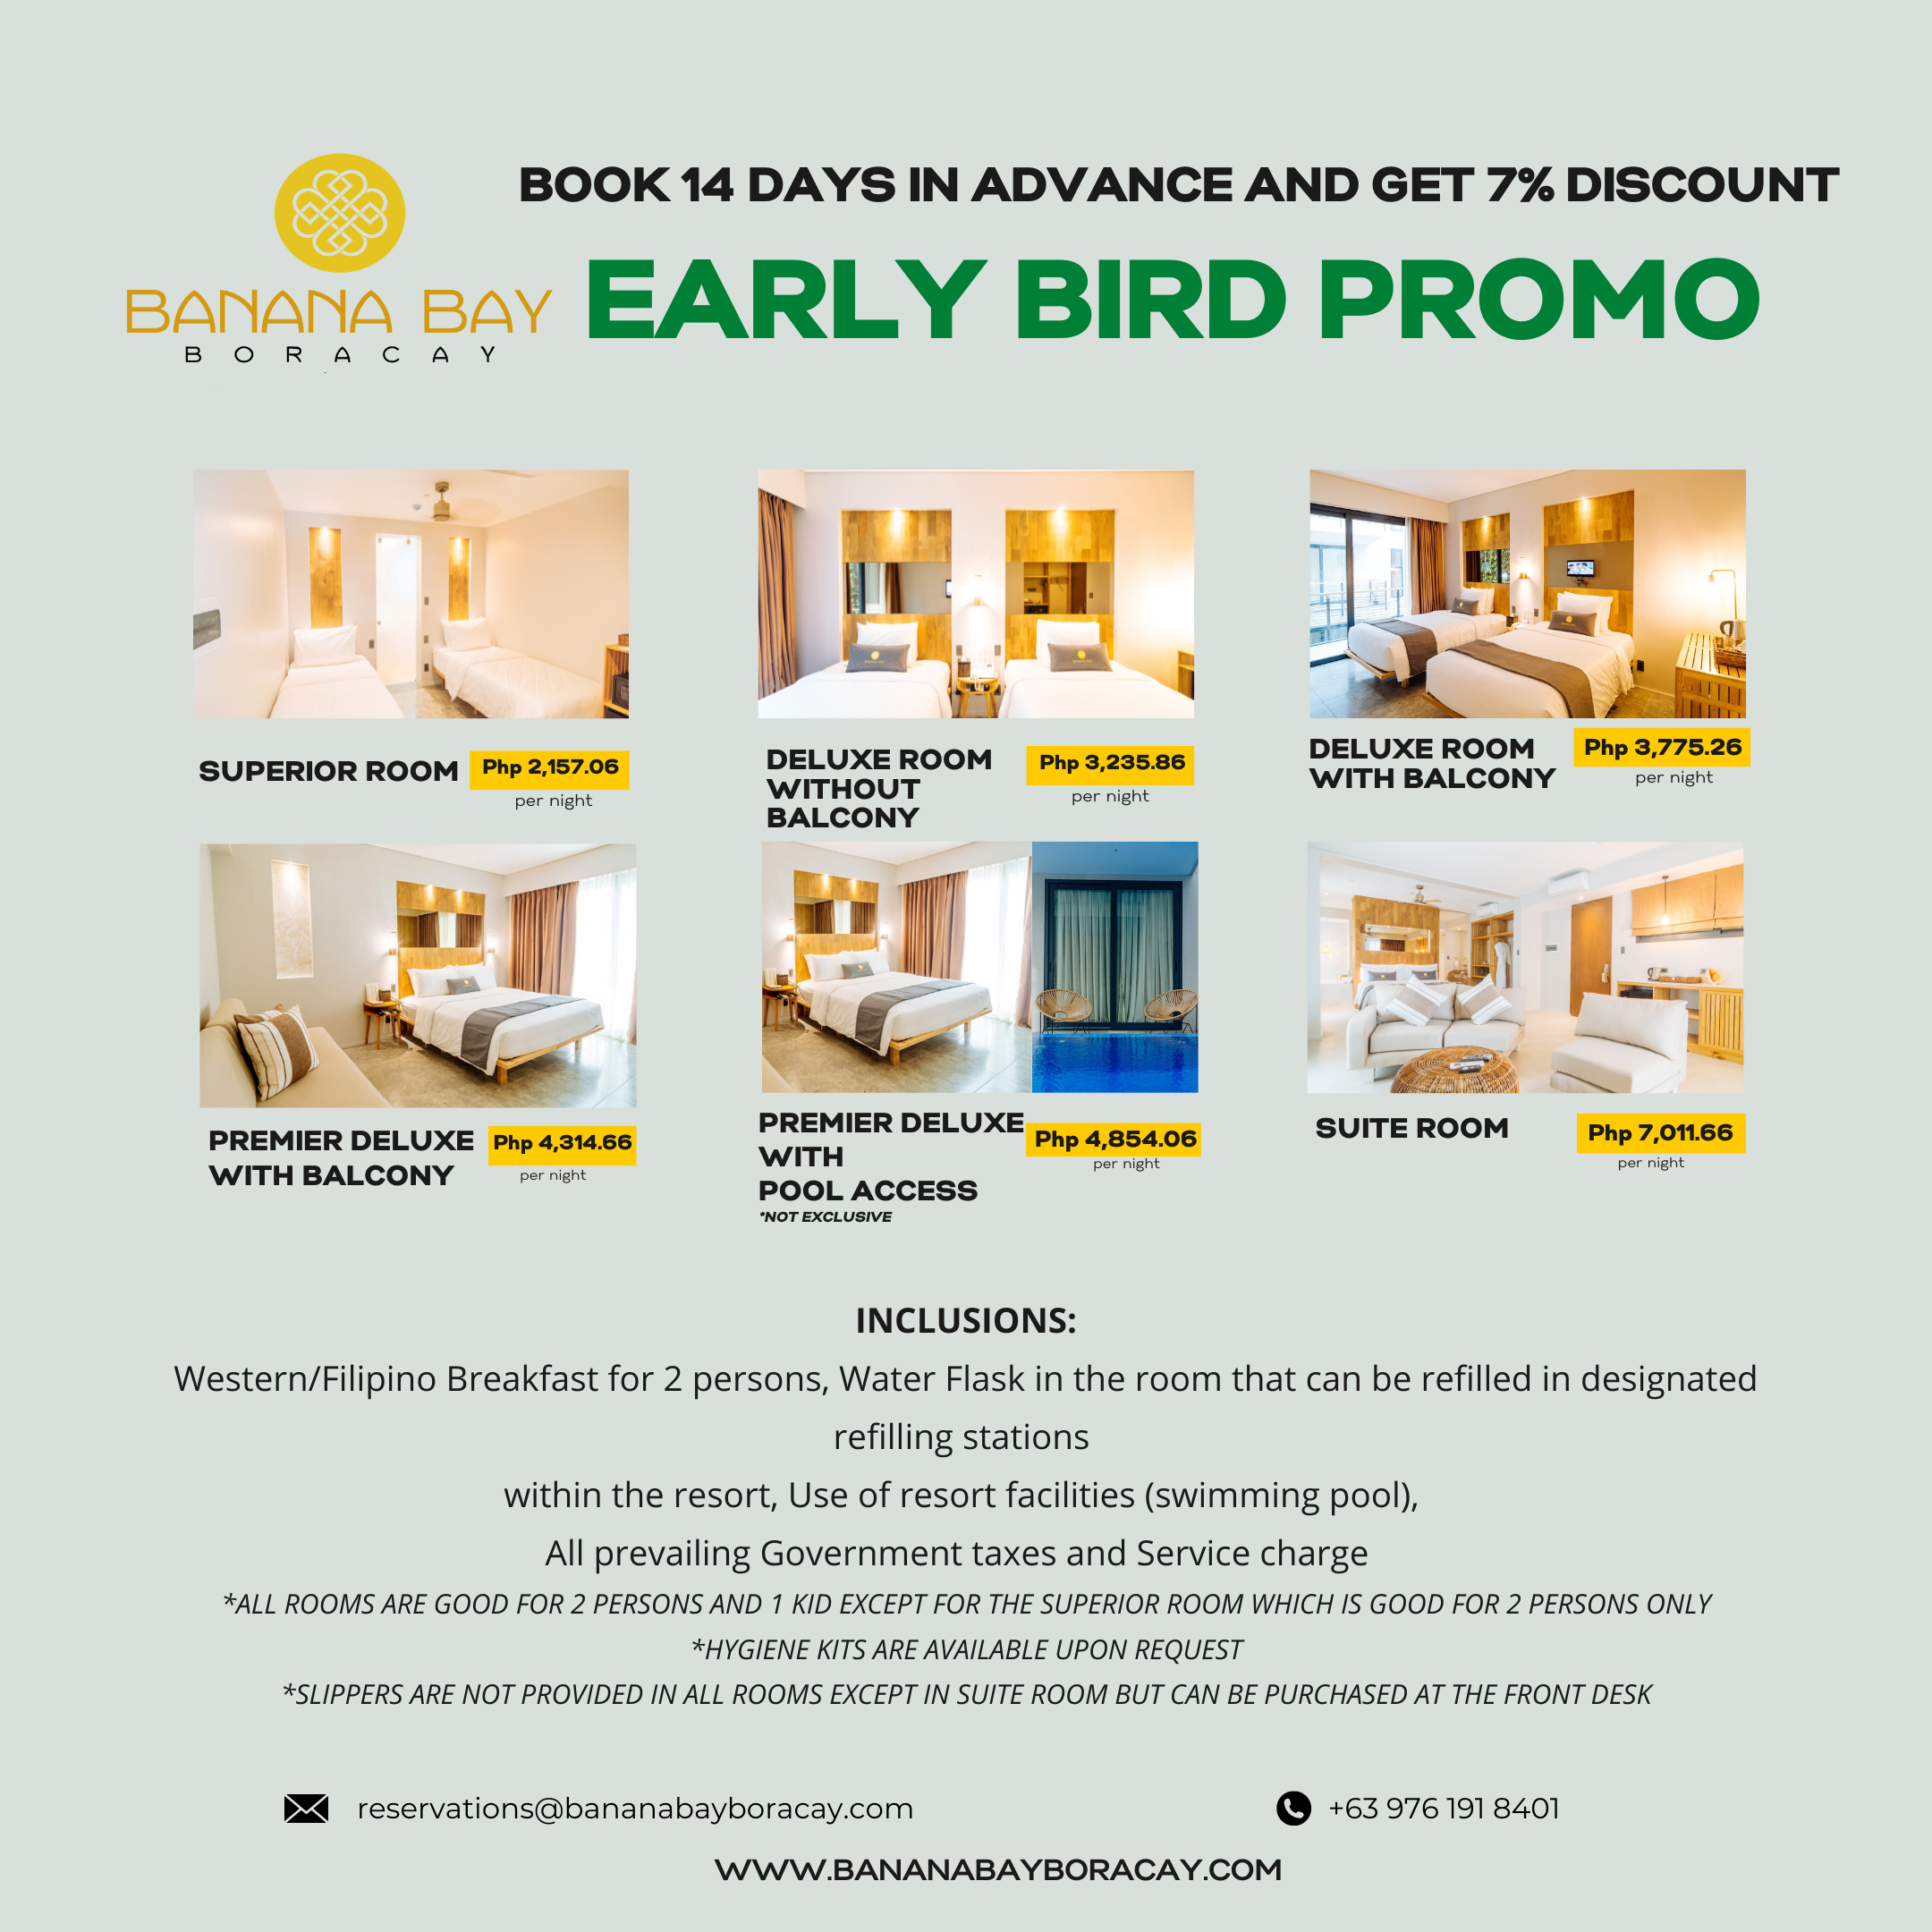 Early Bird Promo - 7% Discount